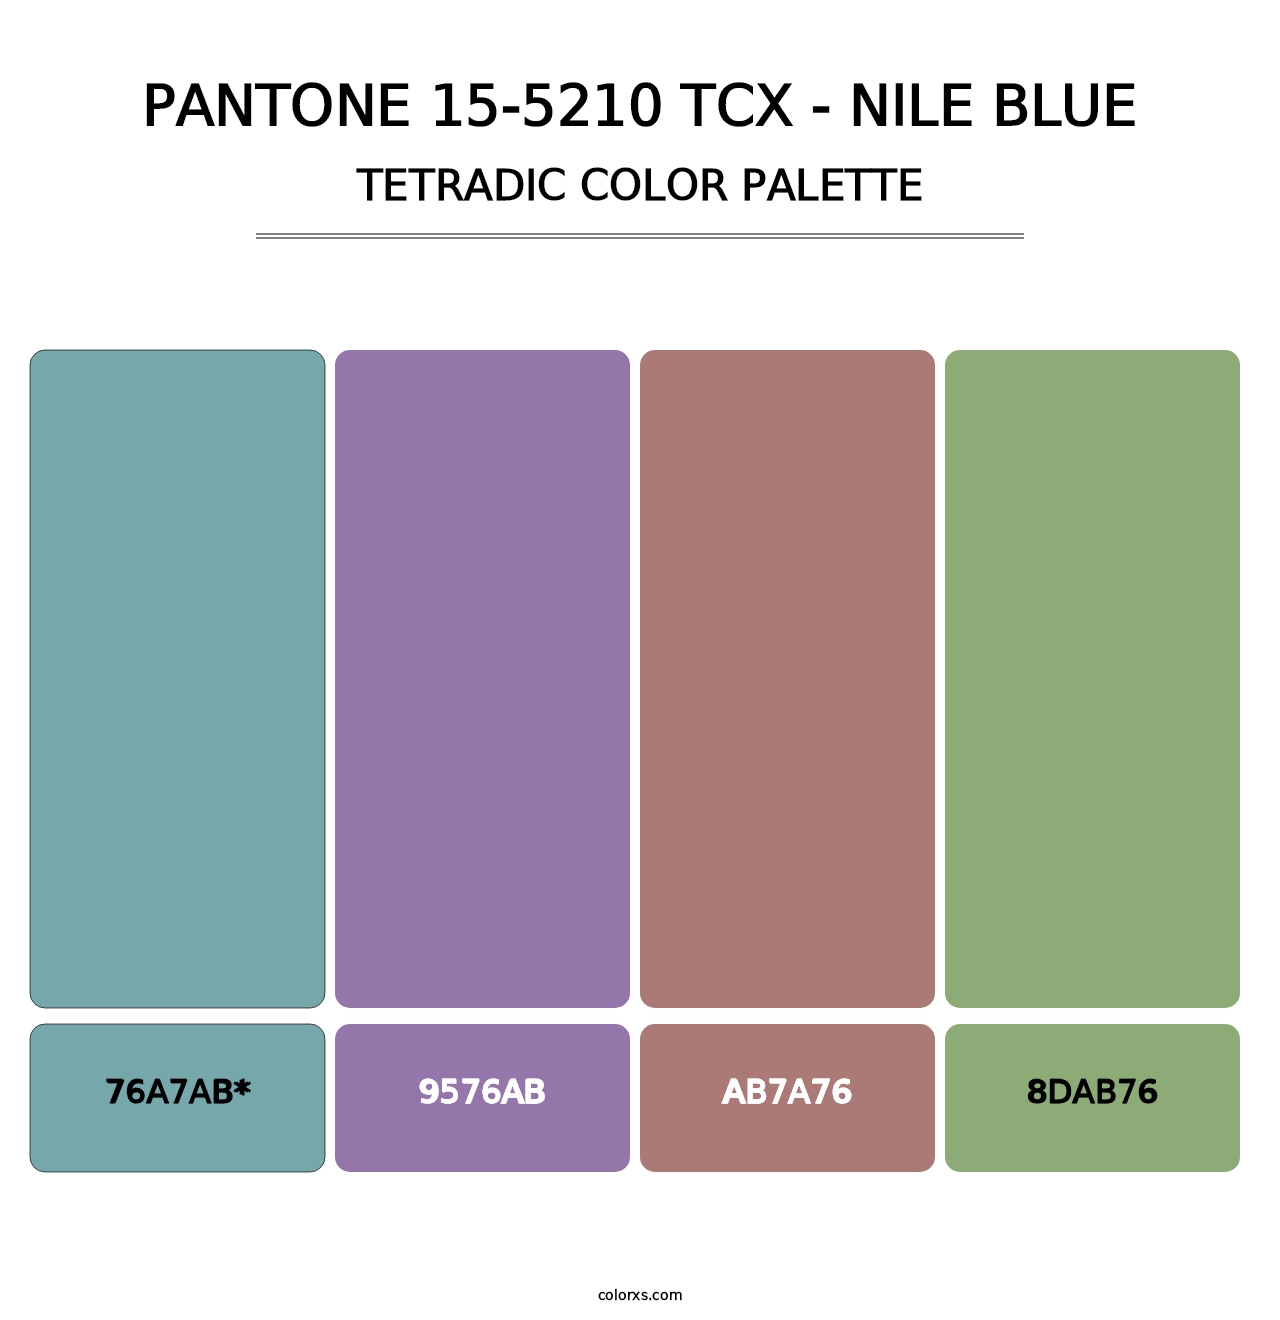 PANTONE 15-5210 TCX - Nile Blue - Tetradic Color Palette